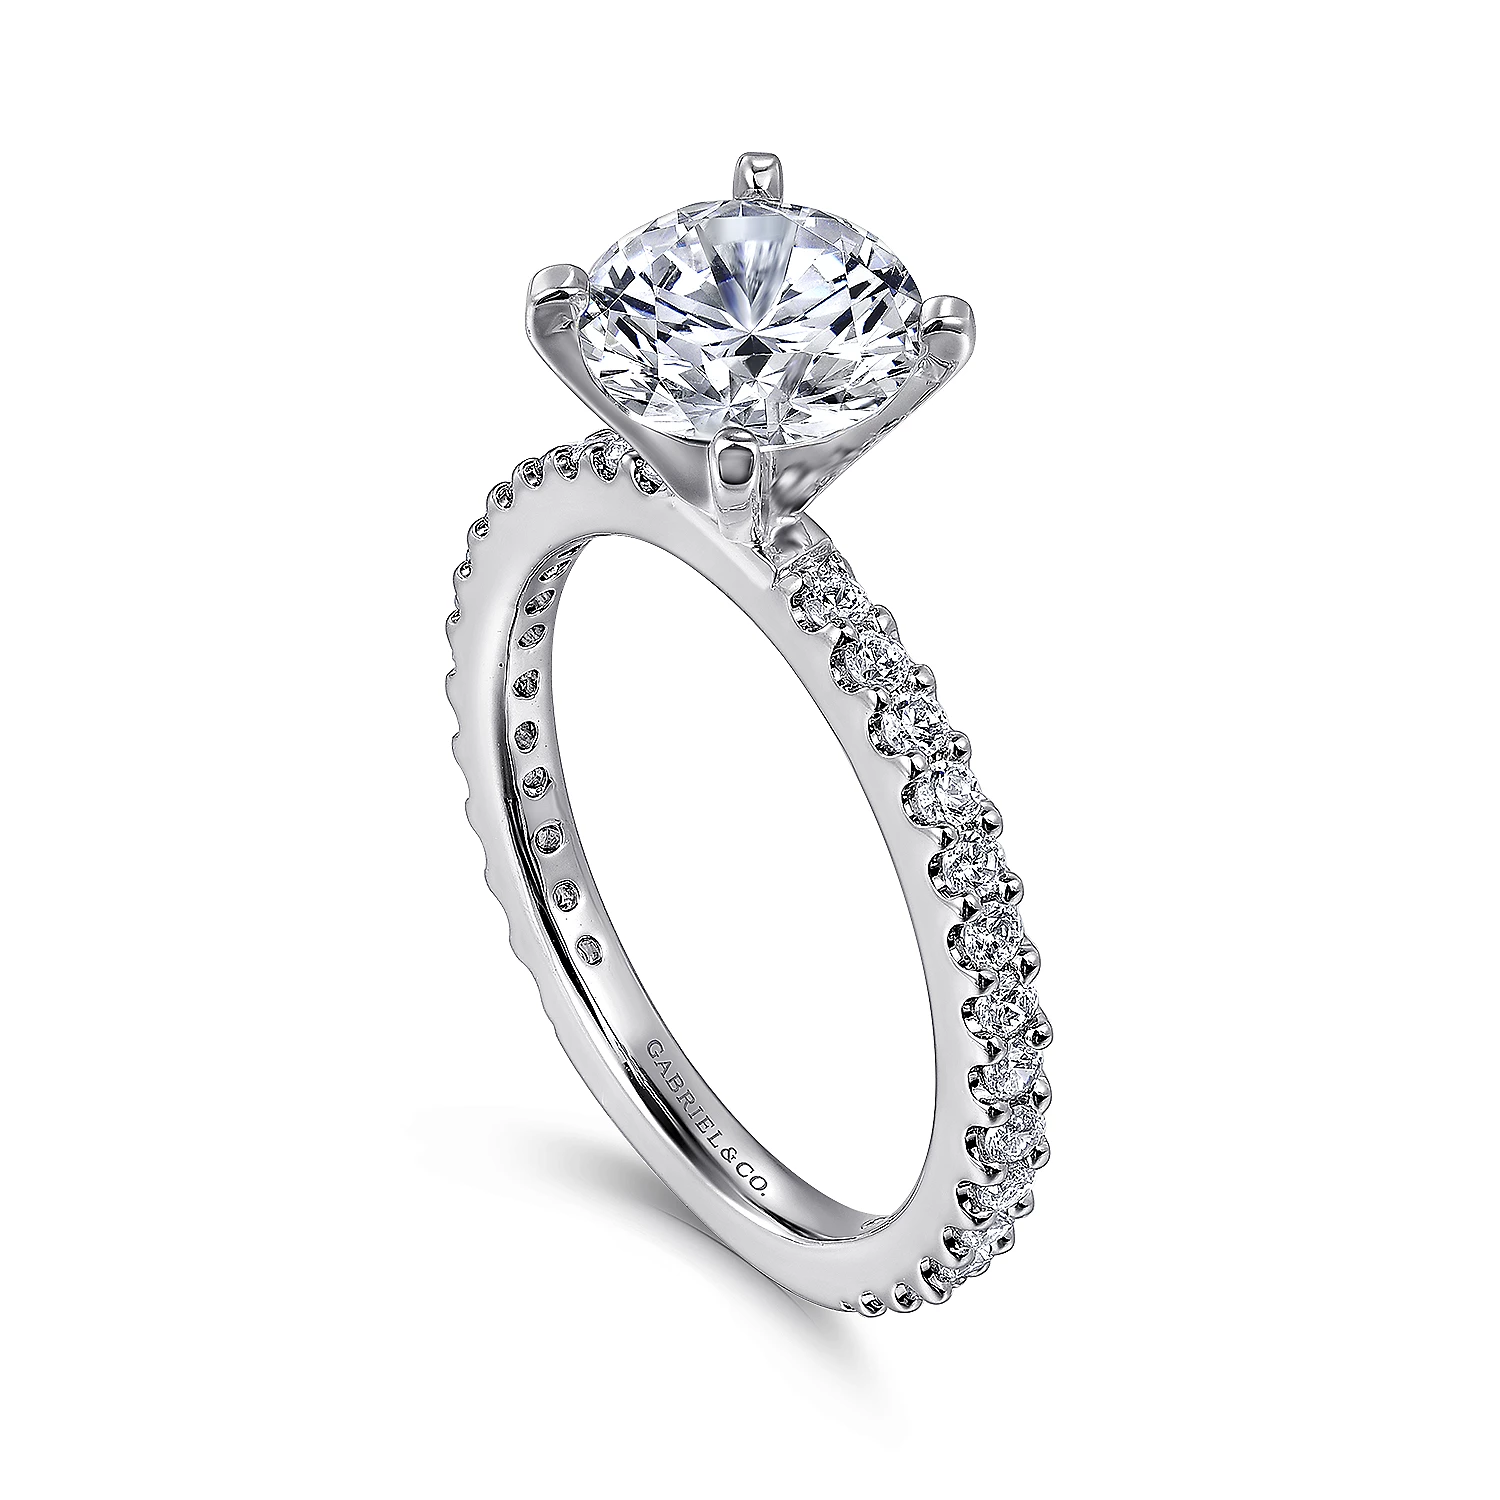 Gabriel & Co 14K White Gold Round Diamond Engagement Ring